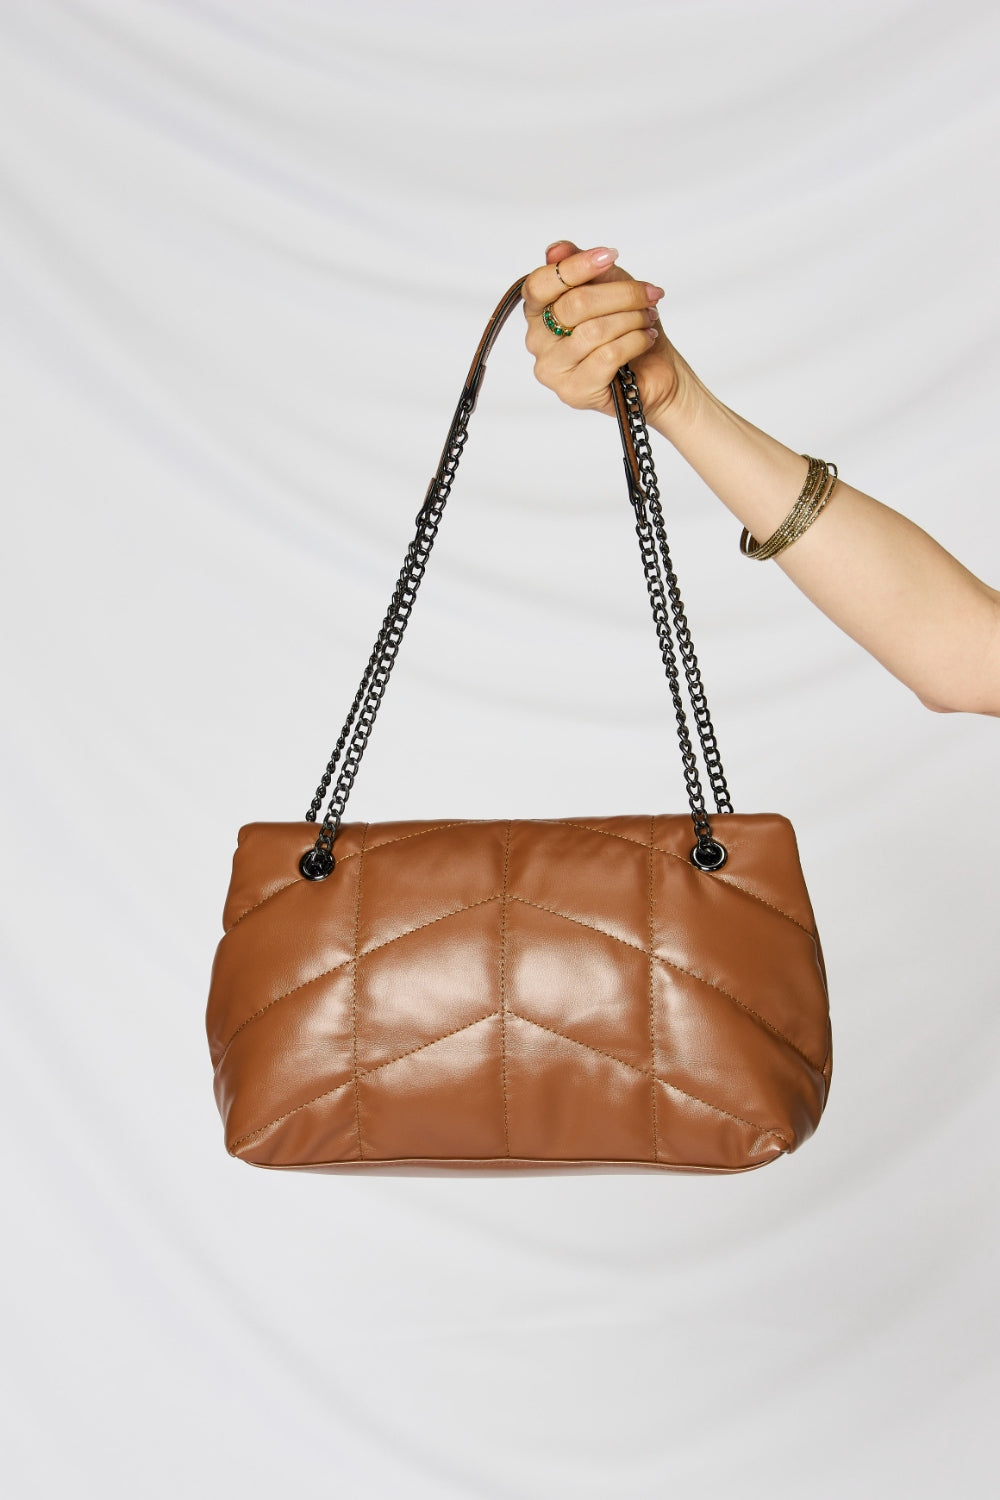 SHOMICO PU Leather Chain Handbag - House of Binx 